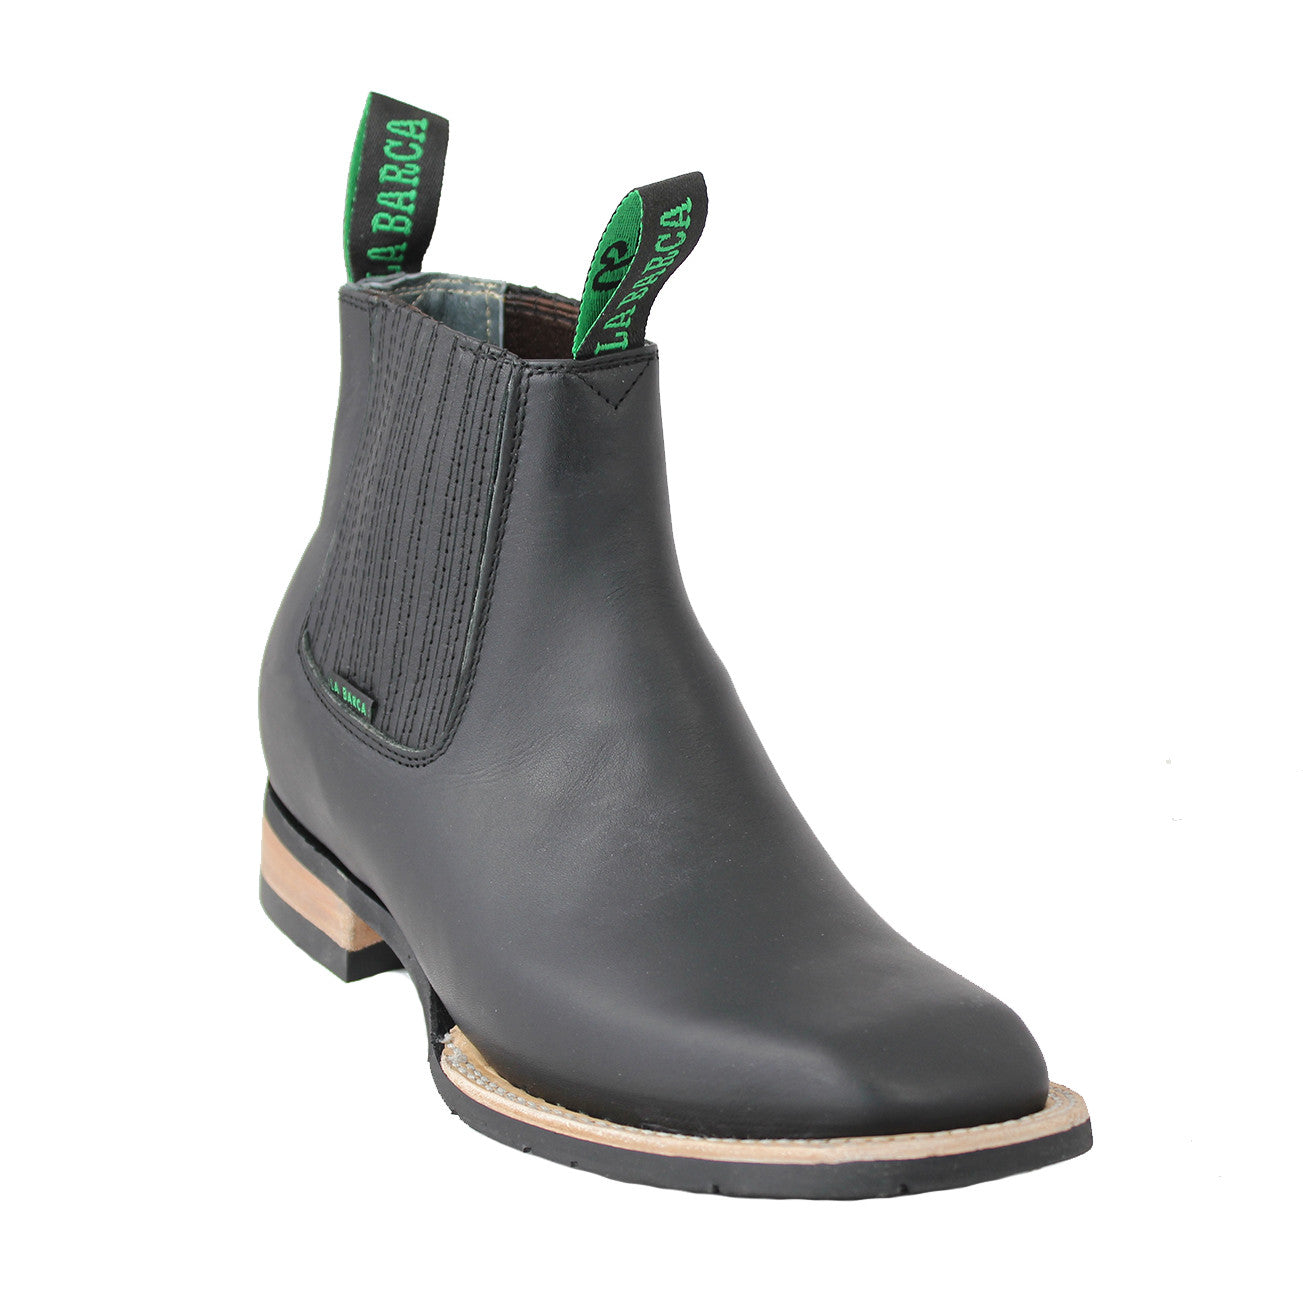 square toe chelsea boots